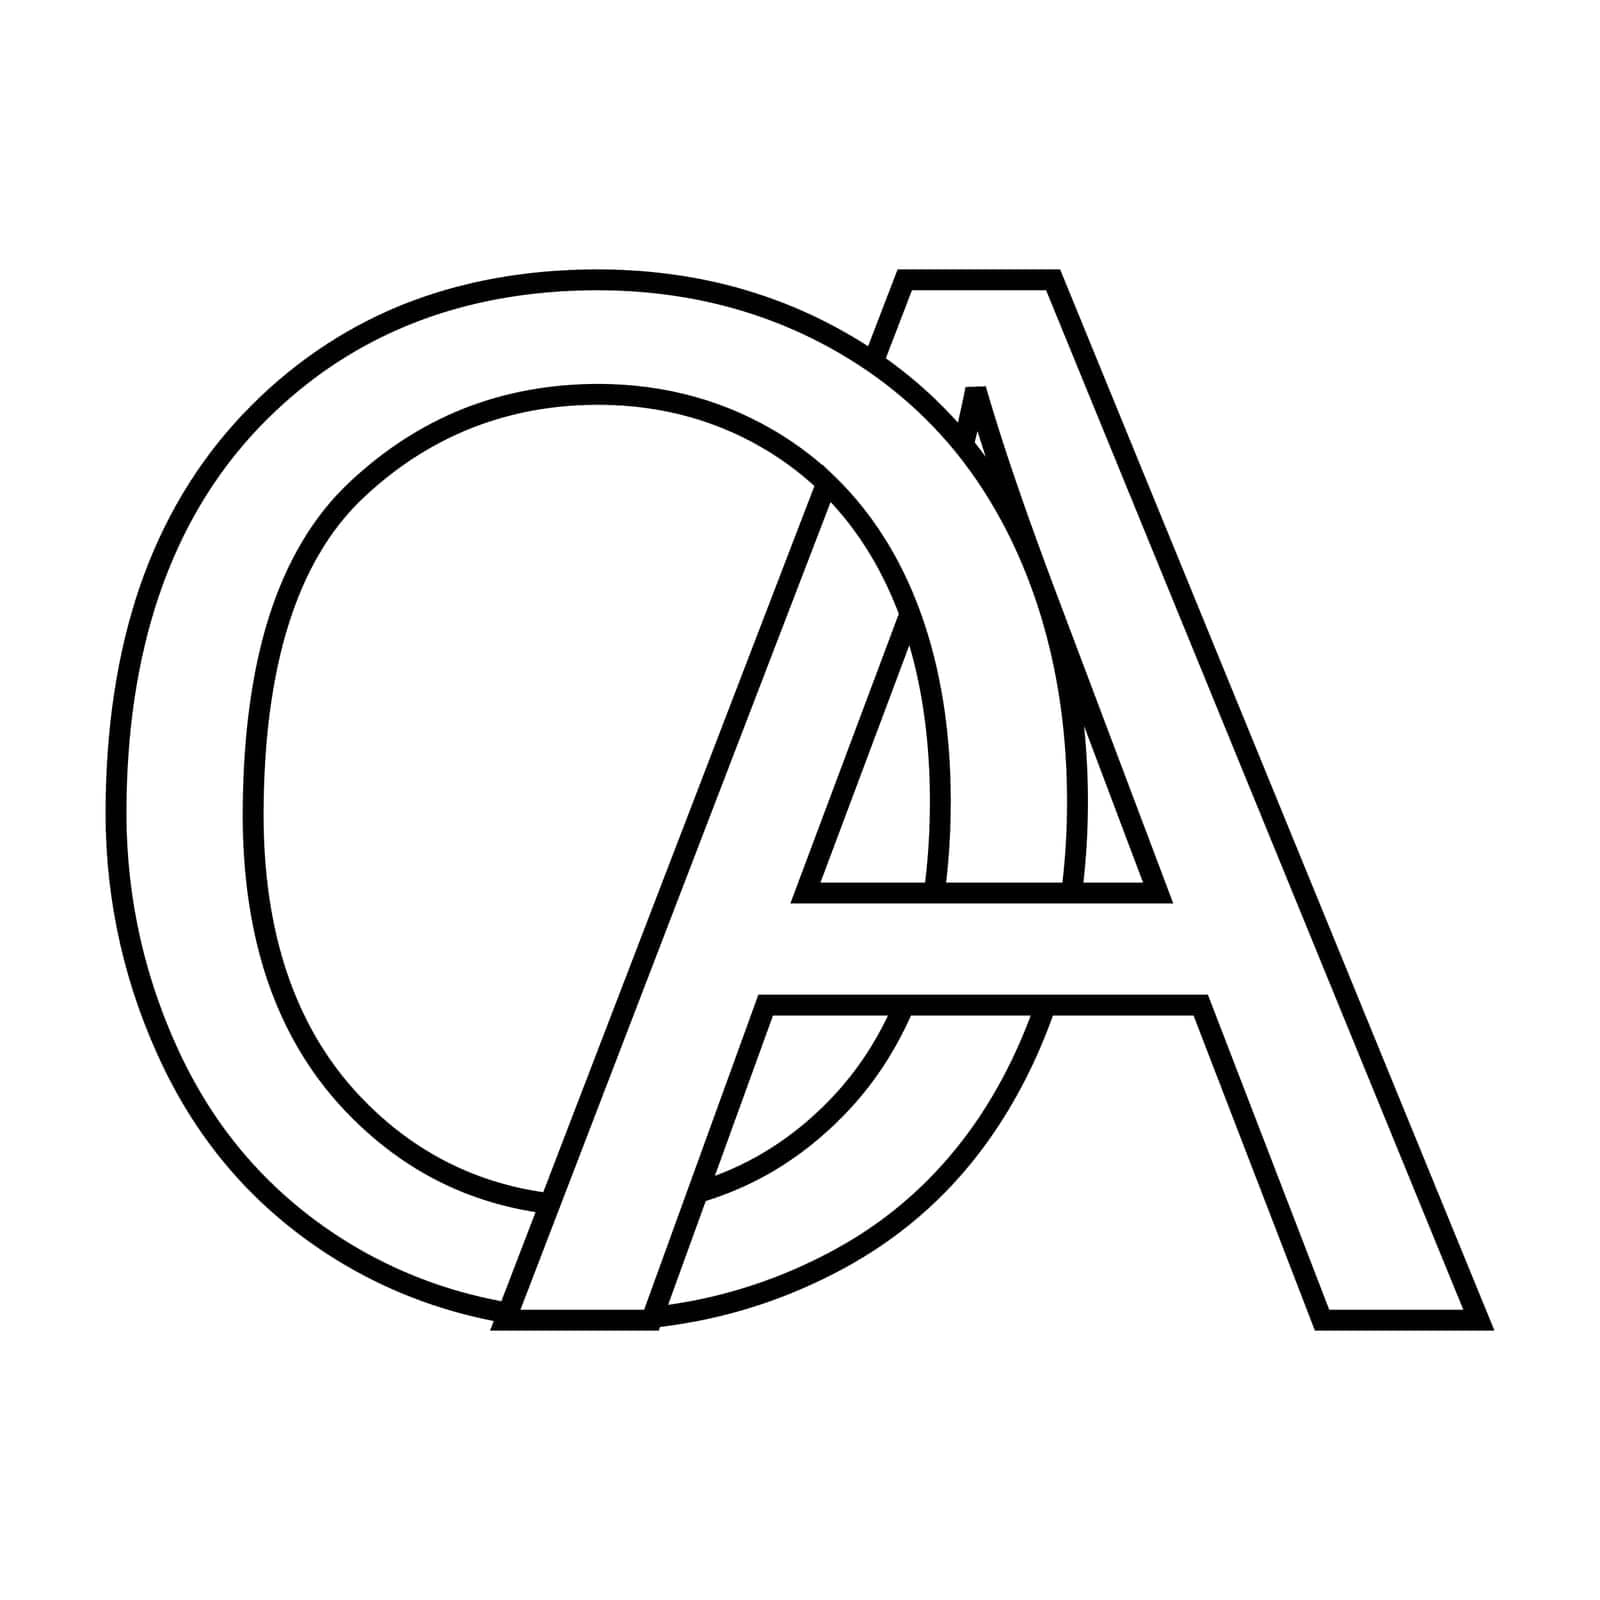 Logo sign oa, ao icon double letters logotype a o